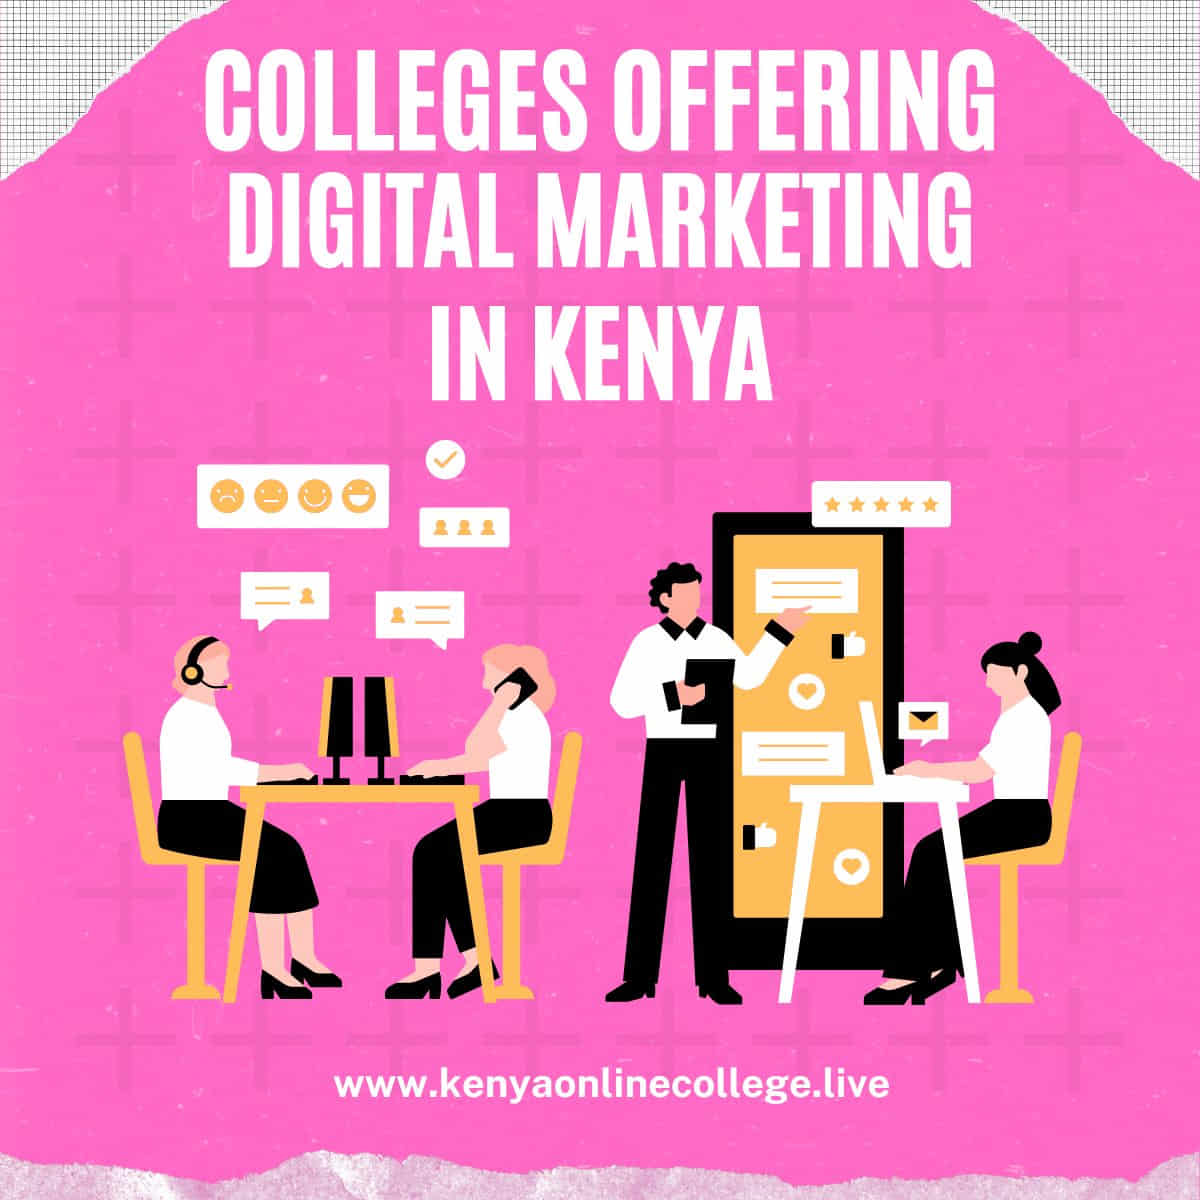 Colleges offering digital marketing in Kenya